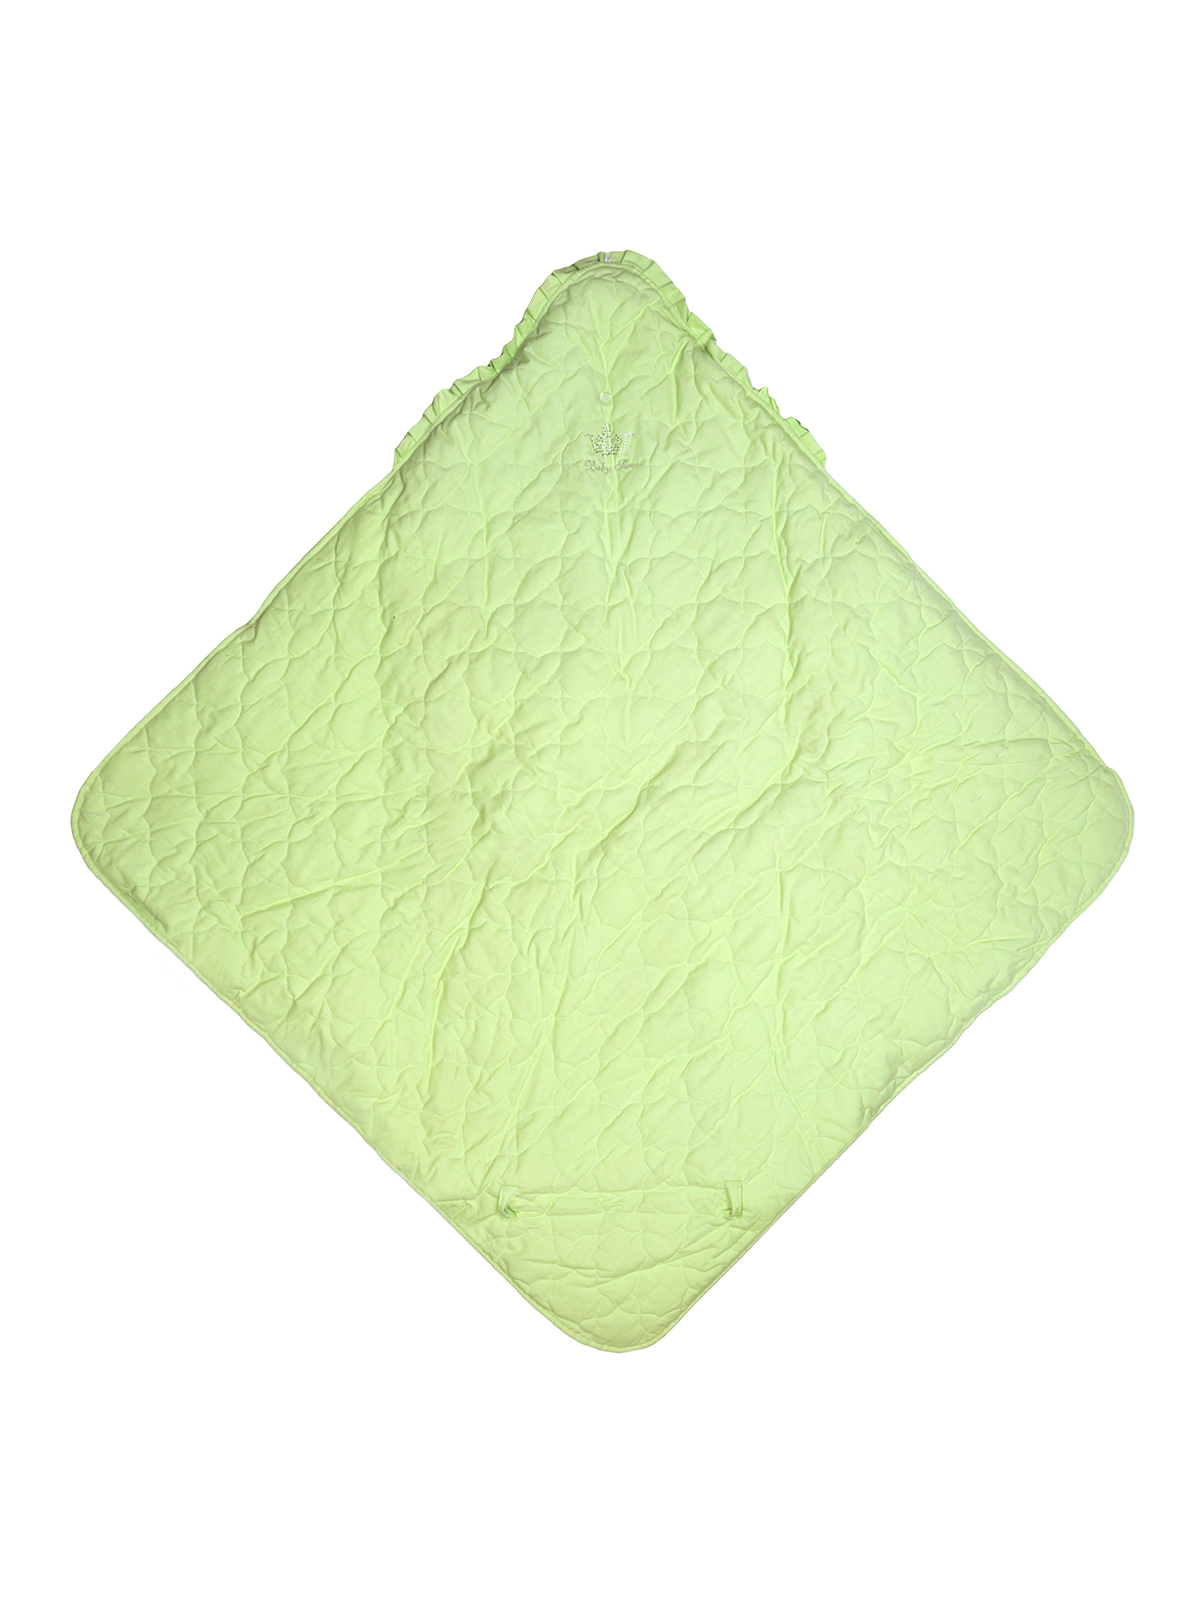 Одеяло - конверт, арт. 11-ЗУ-16, возраст от 0 до 3 месяцев